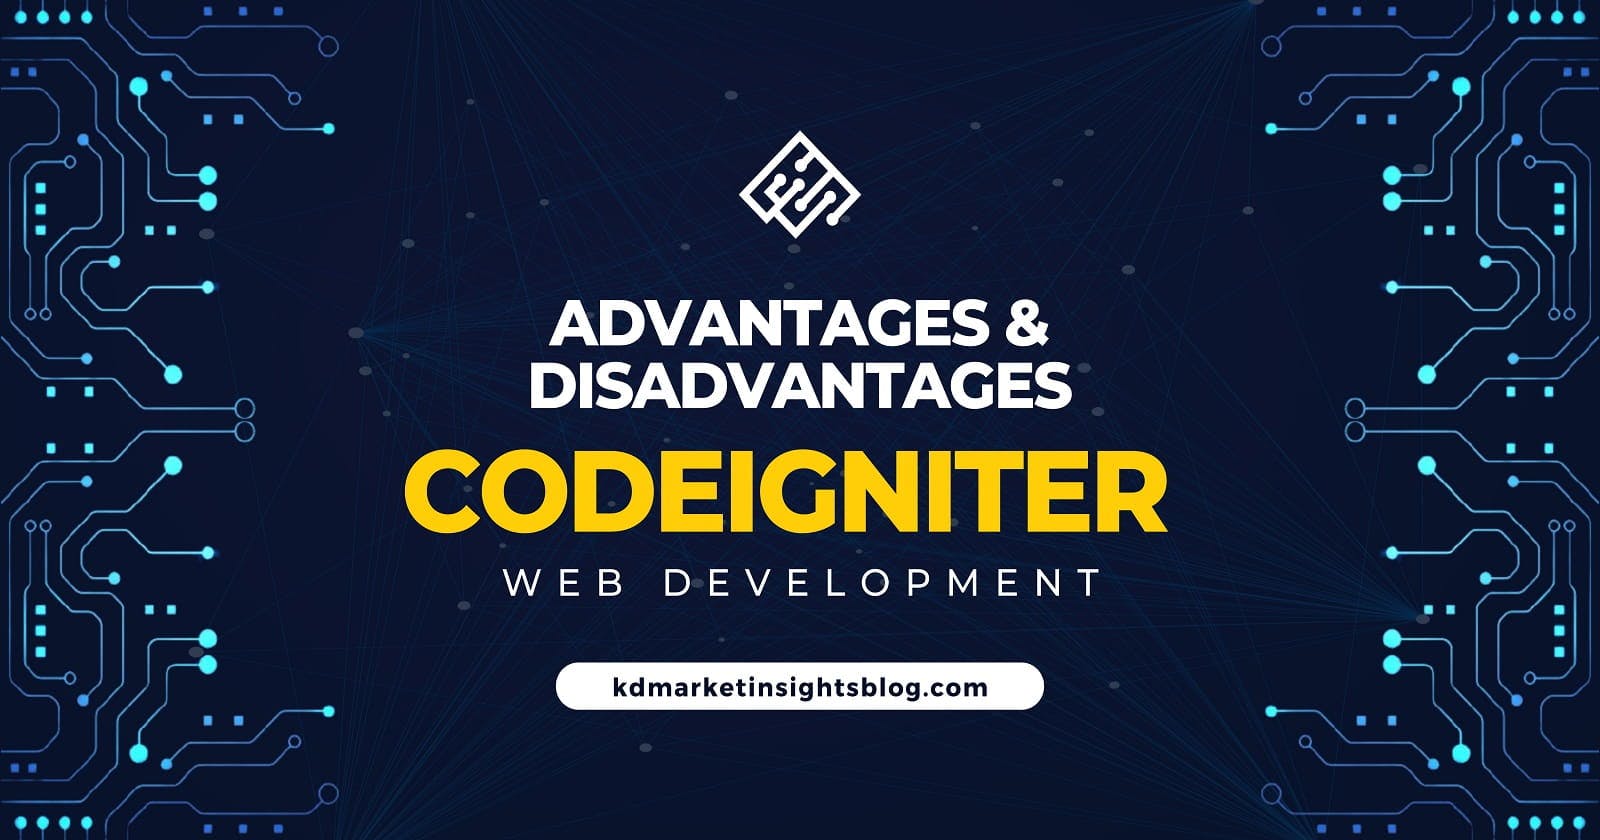 Advantages & Disadvantages of CodeIgniter for Web Development